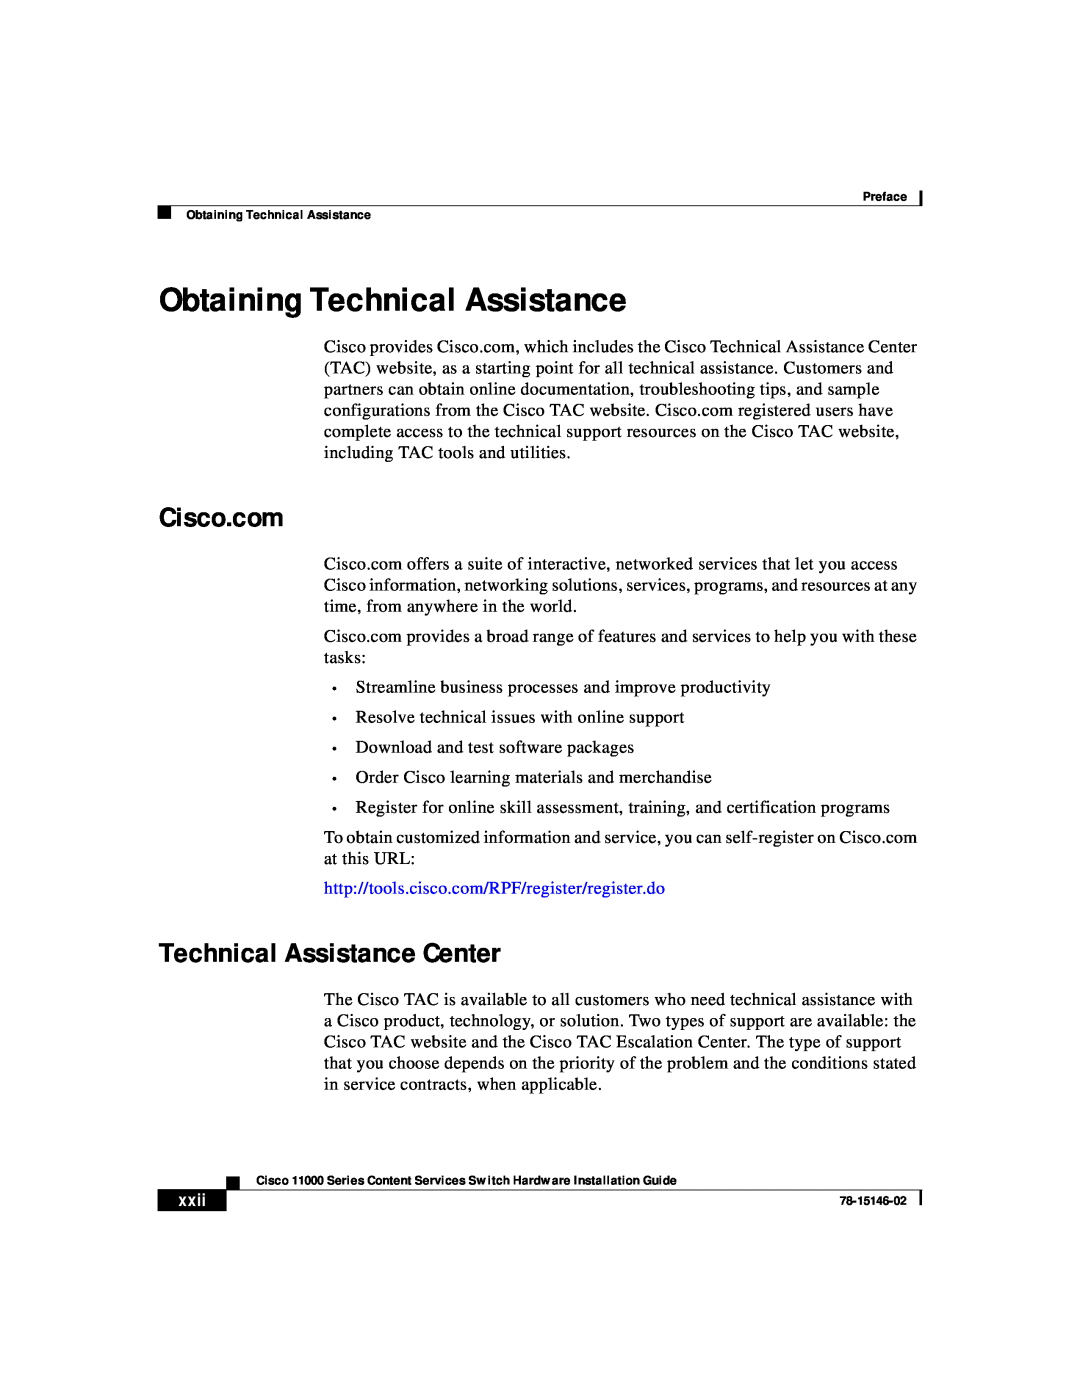 Cisco Systems 11000 Series manual Obtaining Technical Assistance, Technical Assistance Center, Cisco.com, xxii 